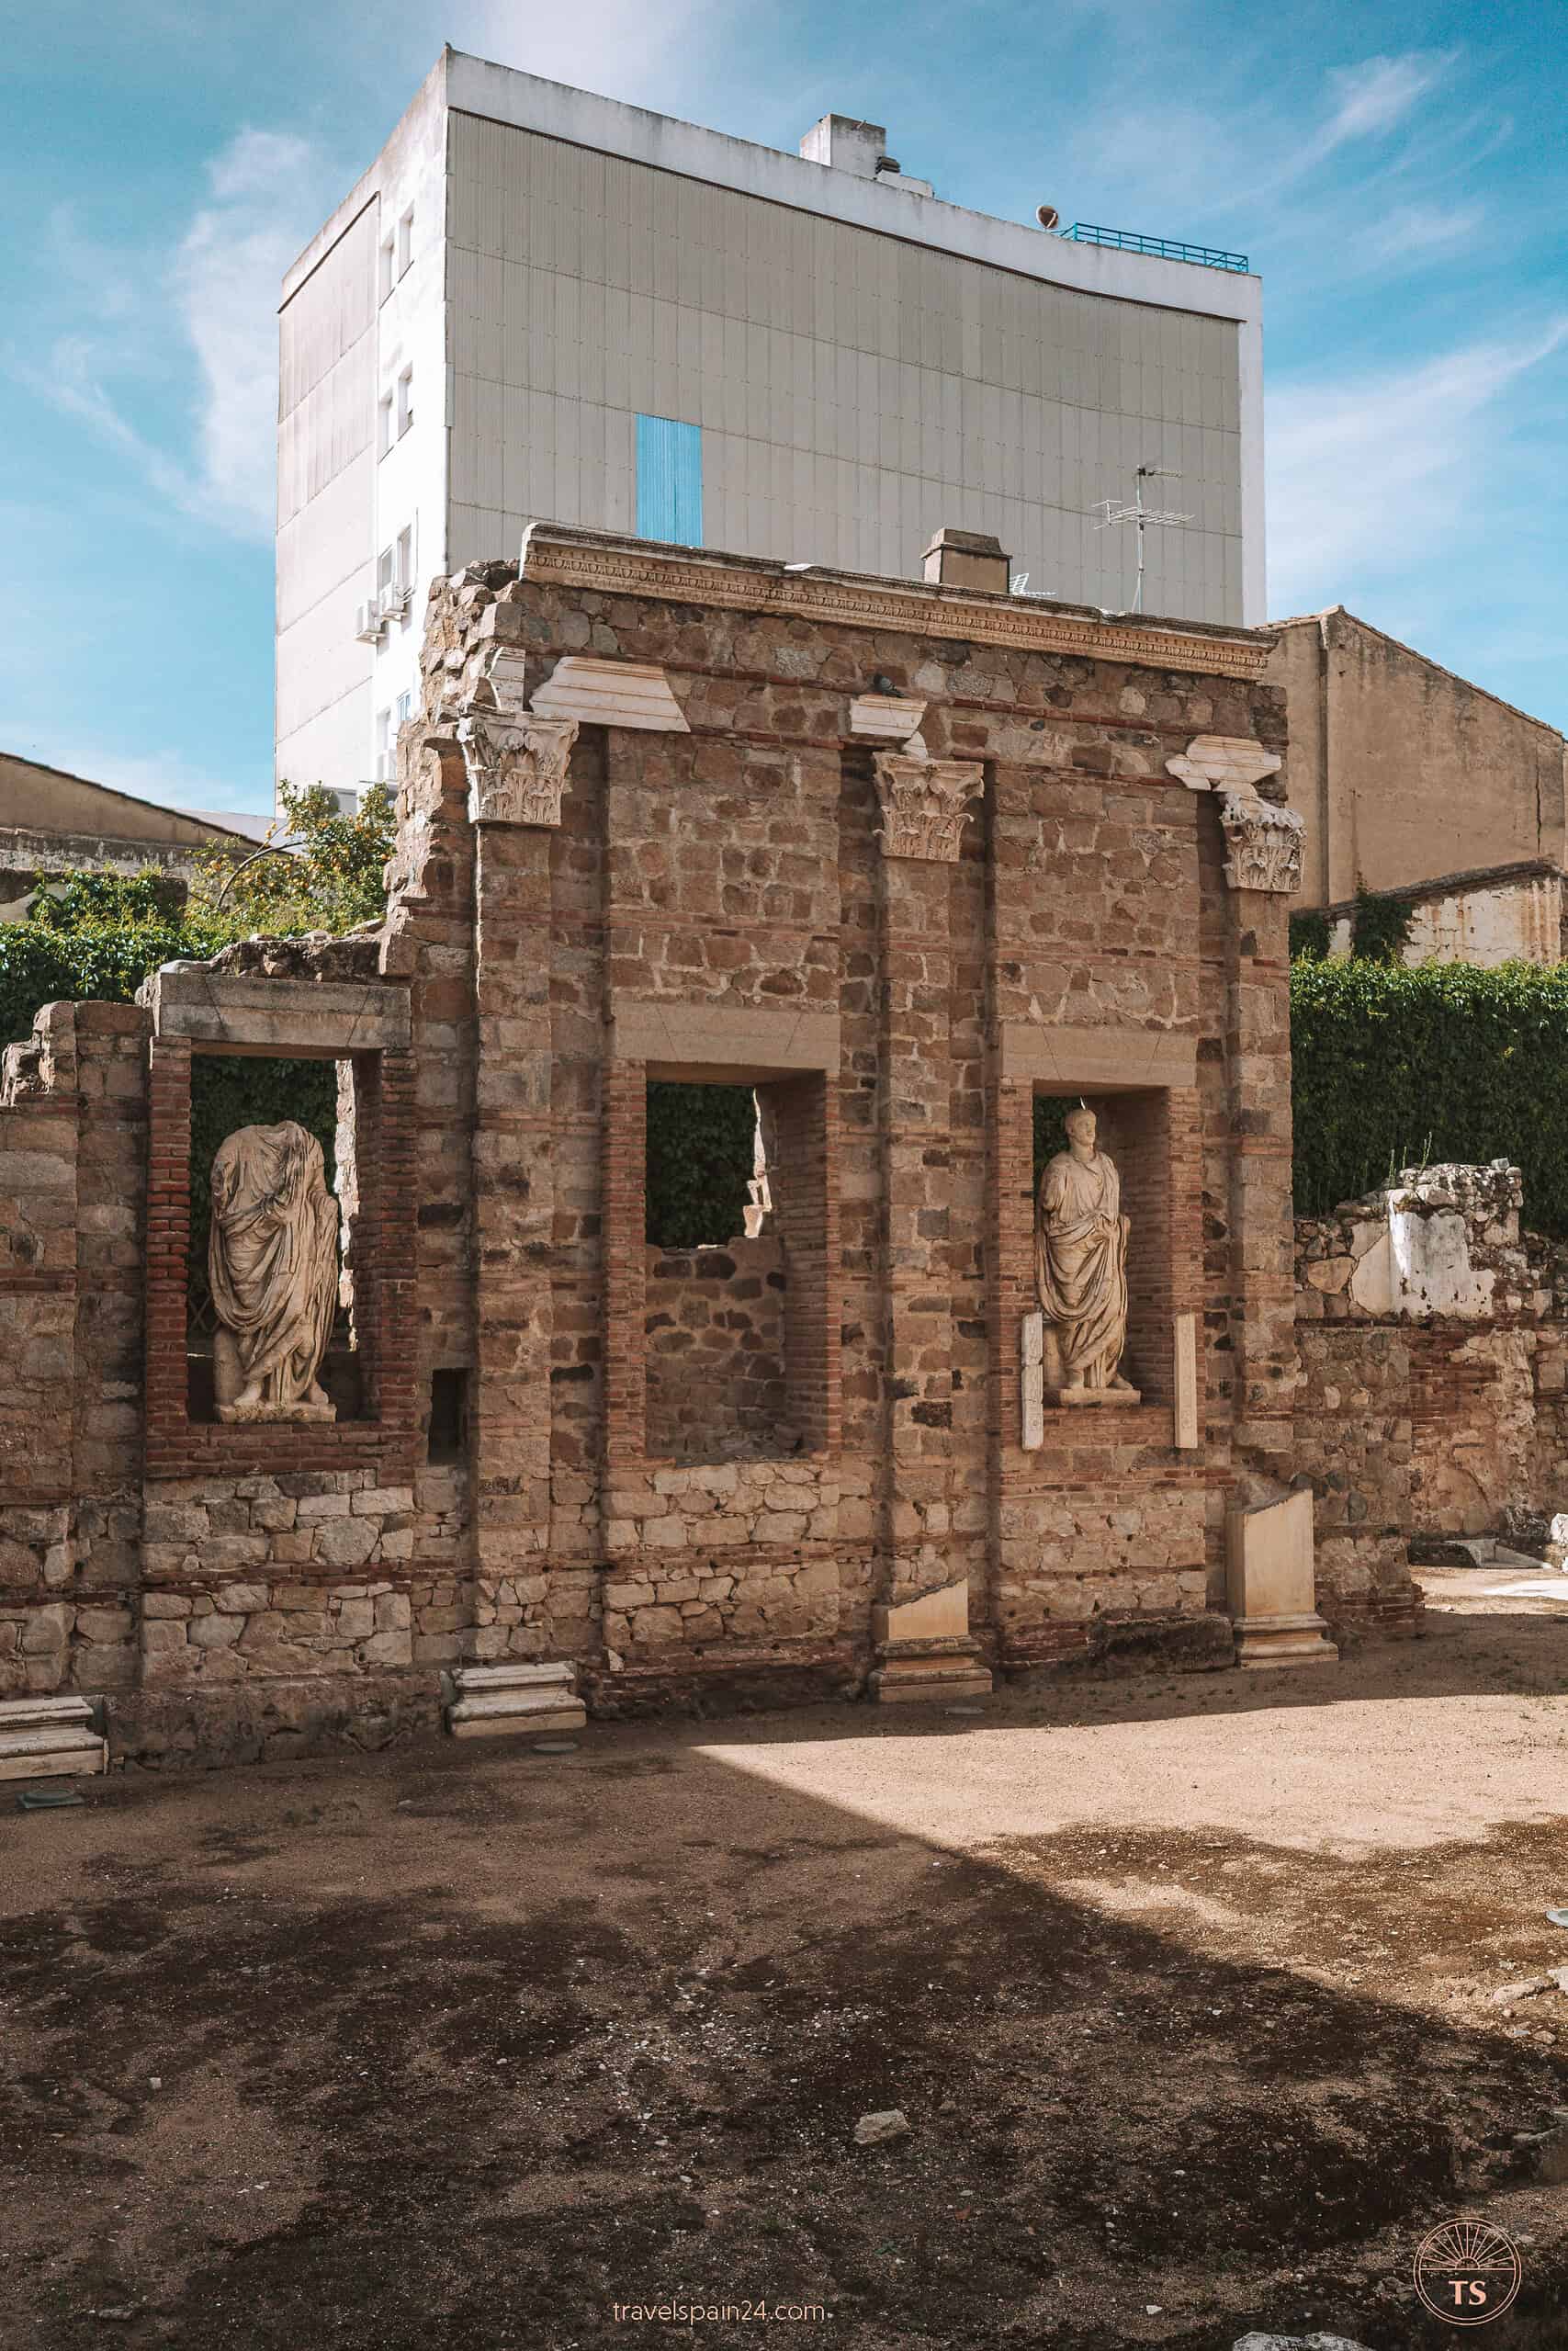 Ancient Roman ruins with statues along a central street at Pórtico del Foro Municipal de Augusta Emérita in Mérida, capturing the city's rich historical past.